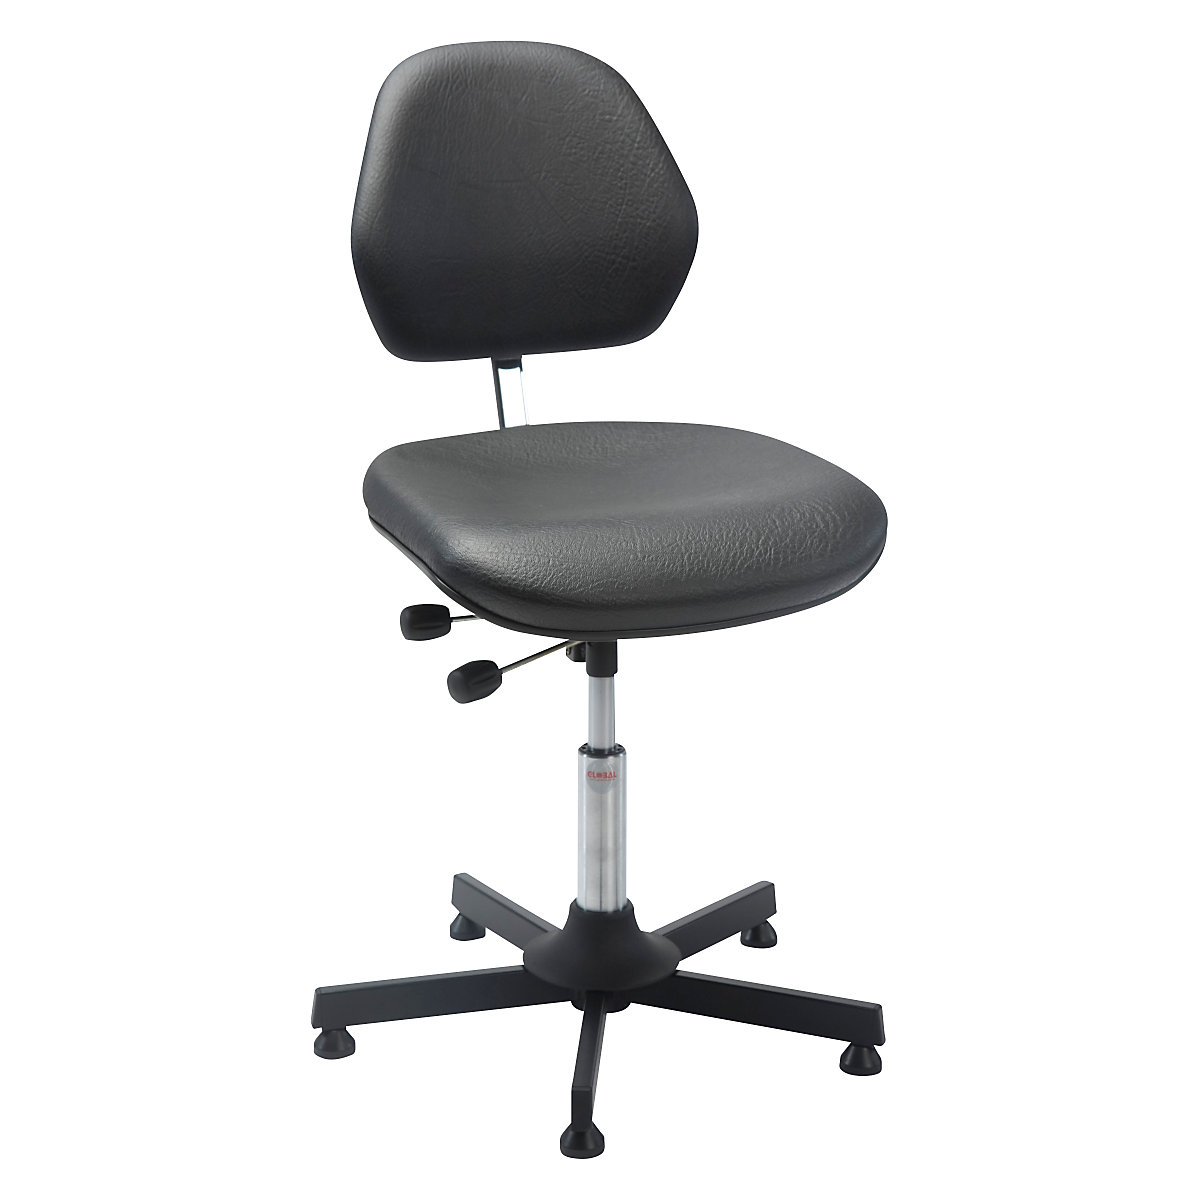 AKTIV industrial swivel chair